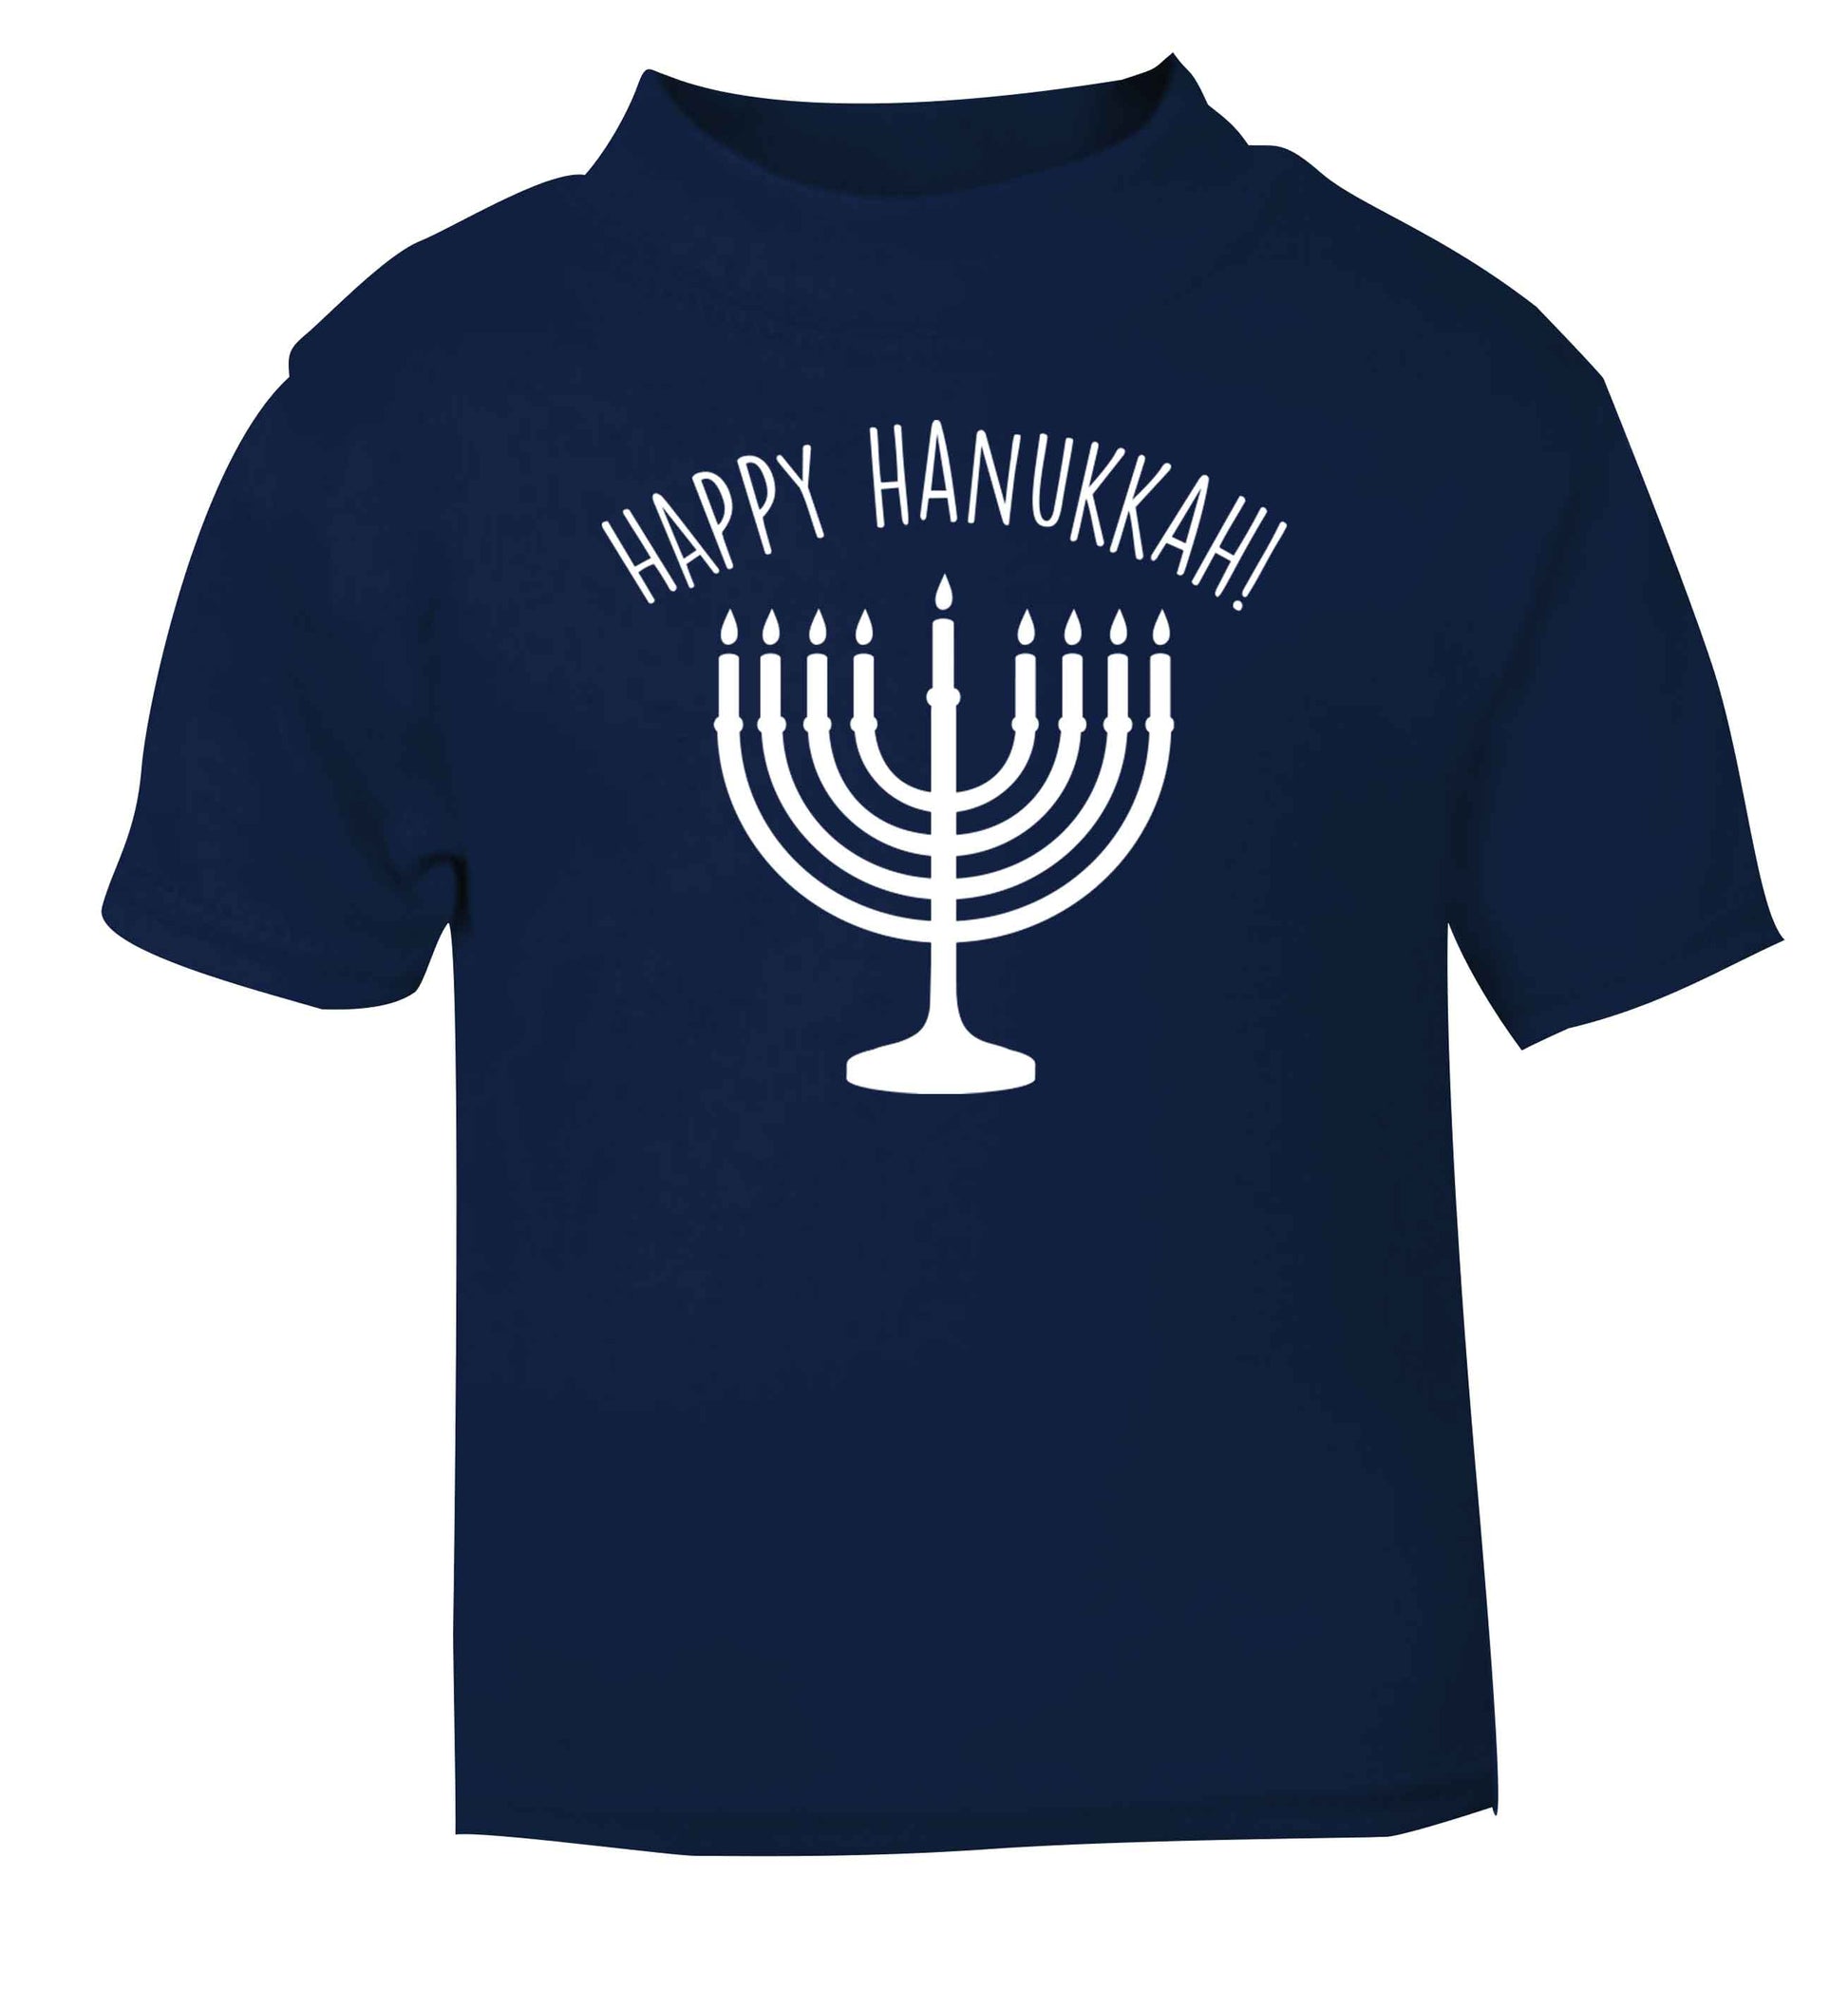 Happy hanukkah navy baby toddler Tshirt 2 Years